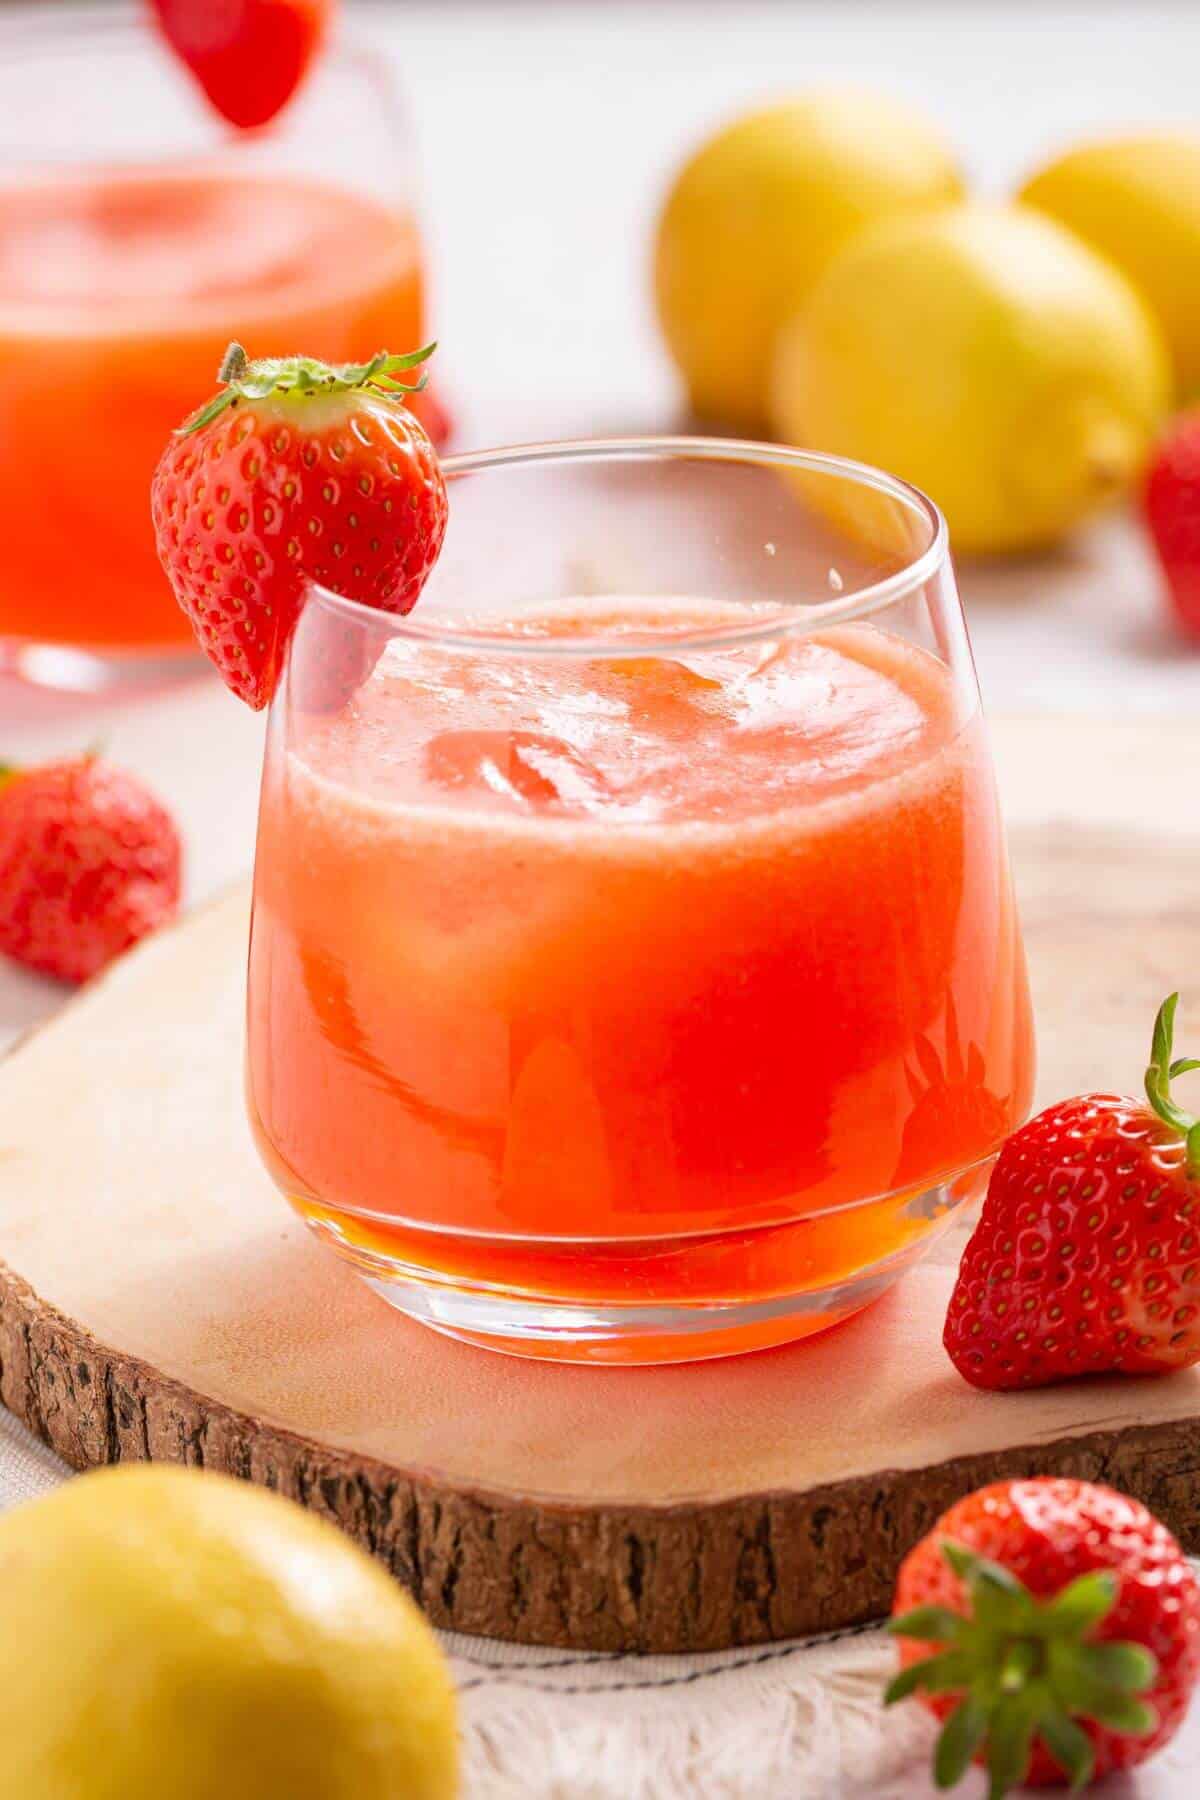 Strawberry lemonade in glasses with strawberries and lemons.